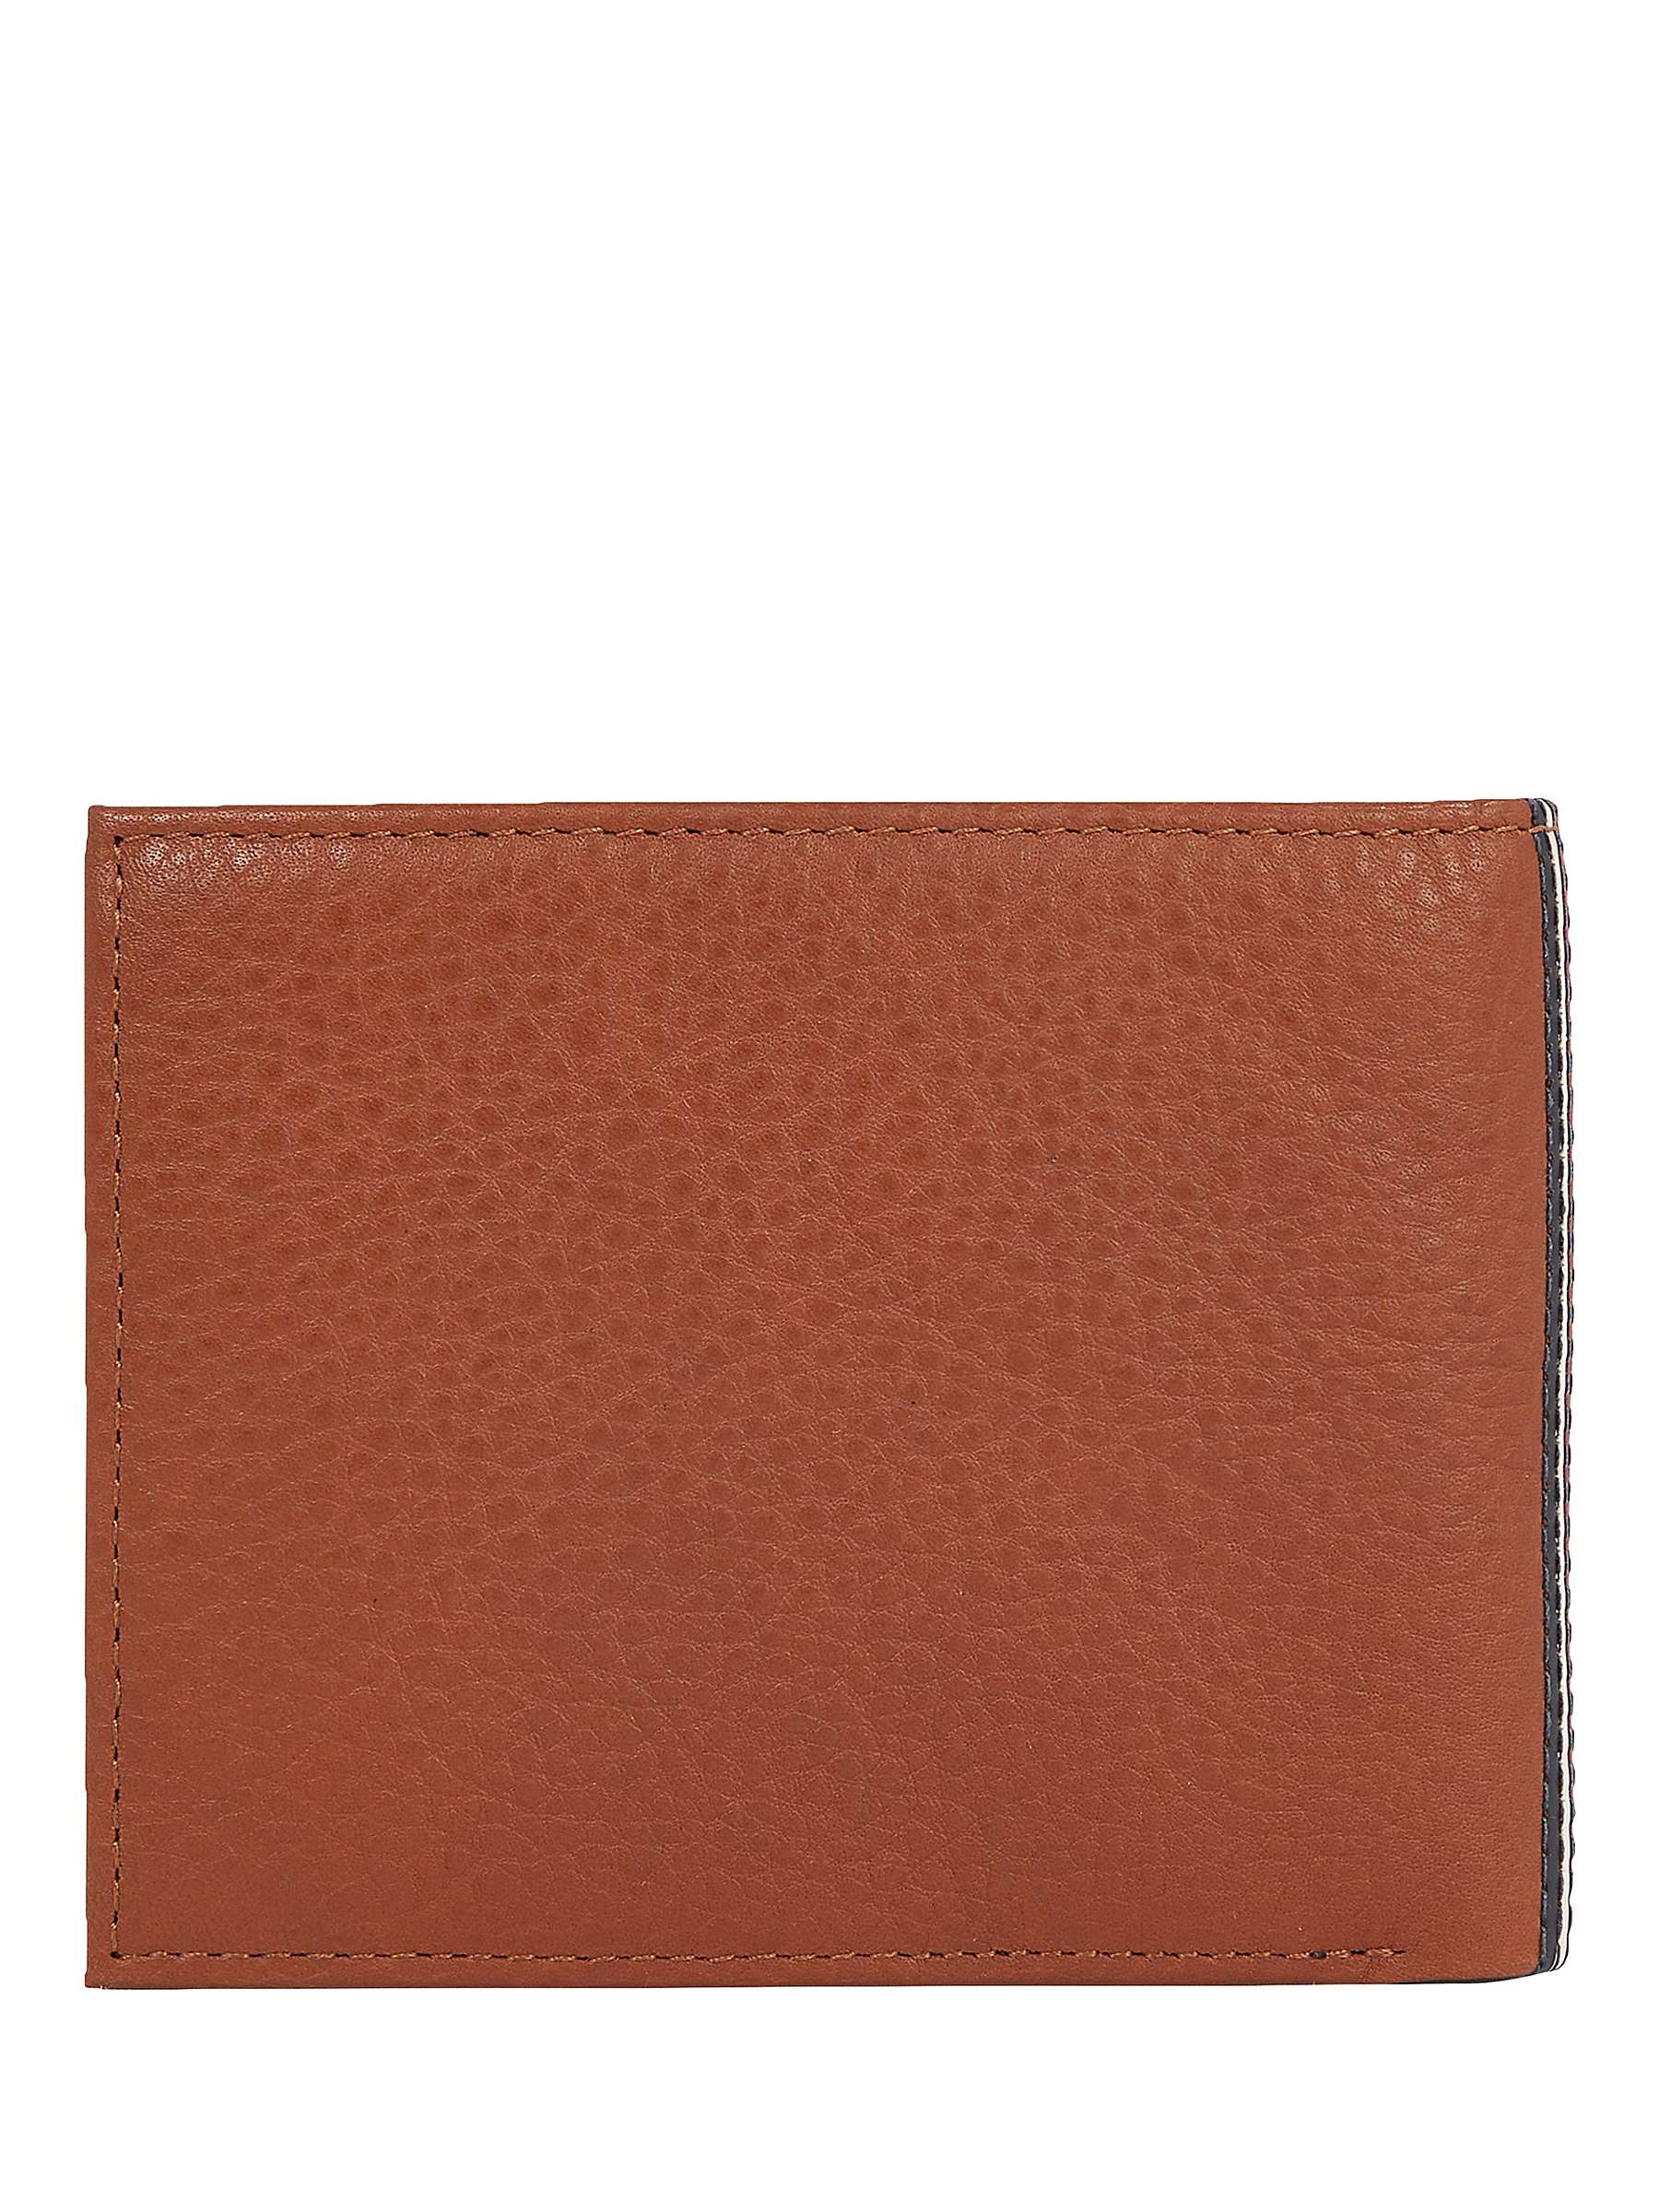 Buy Tommy Hilfiger Leather Wallet, Dark Brown Online at johnlewis.com